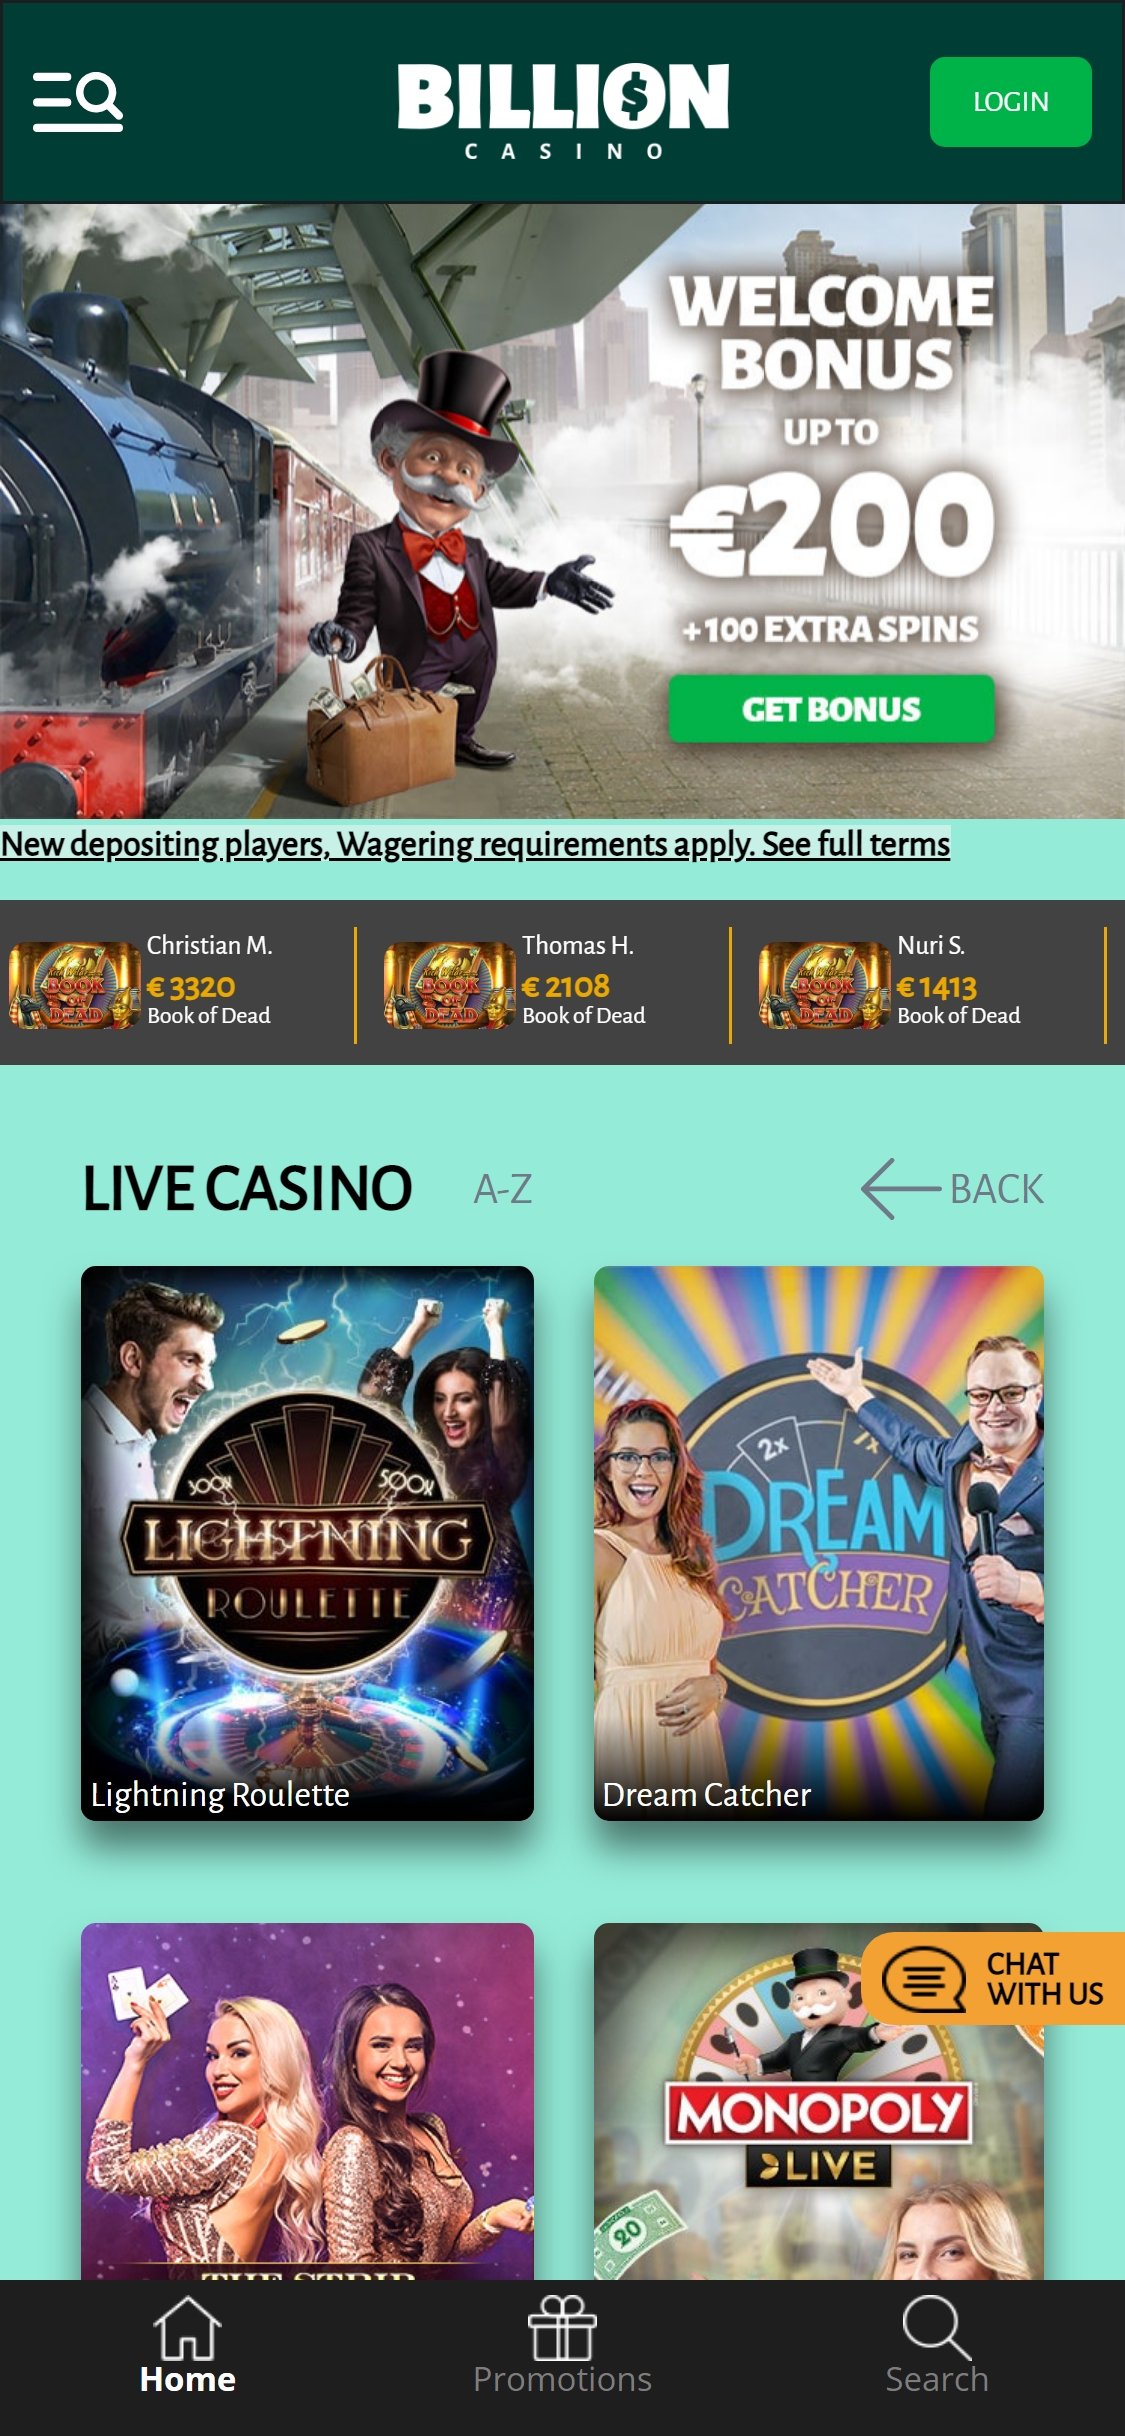 Billion Casino Mobile Live Dealer Games Review